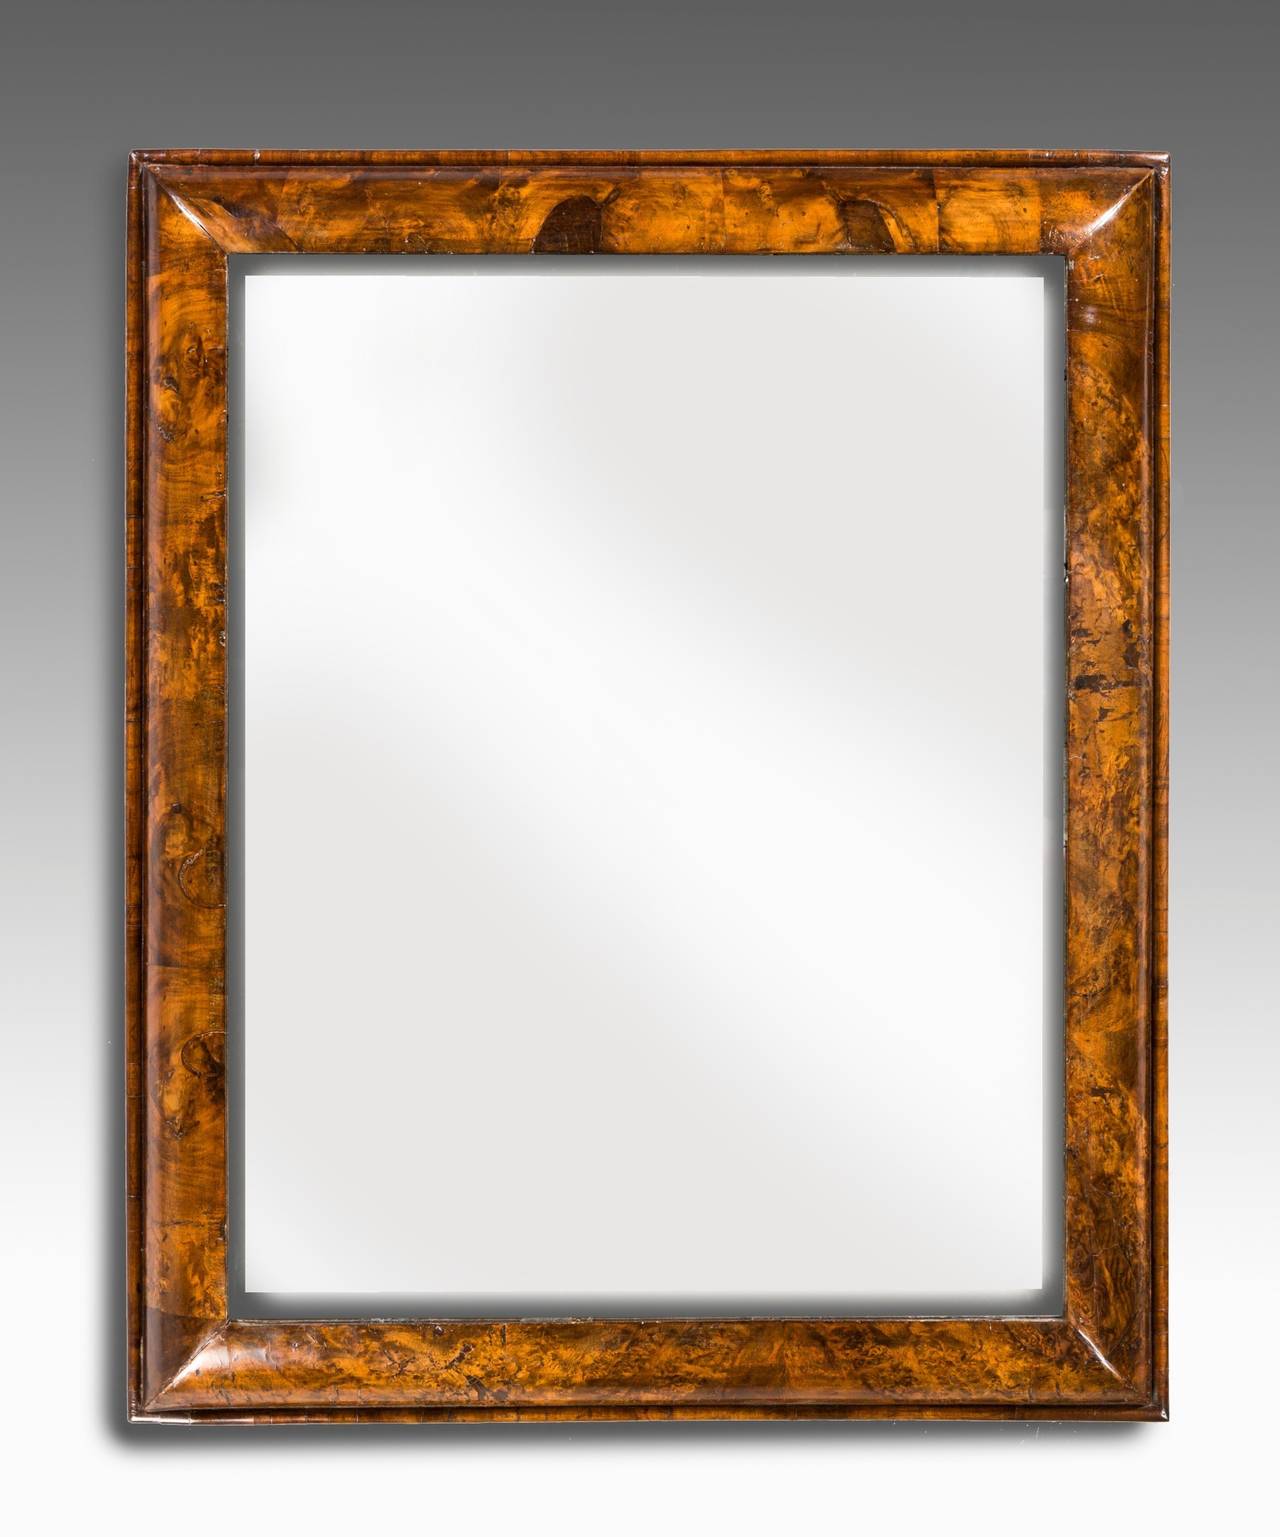 A Queen Anne period walnut veneered cushion mirror; retaining its original bevelled mirror plate.